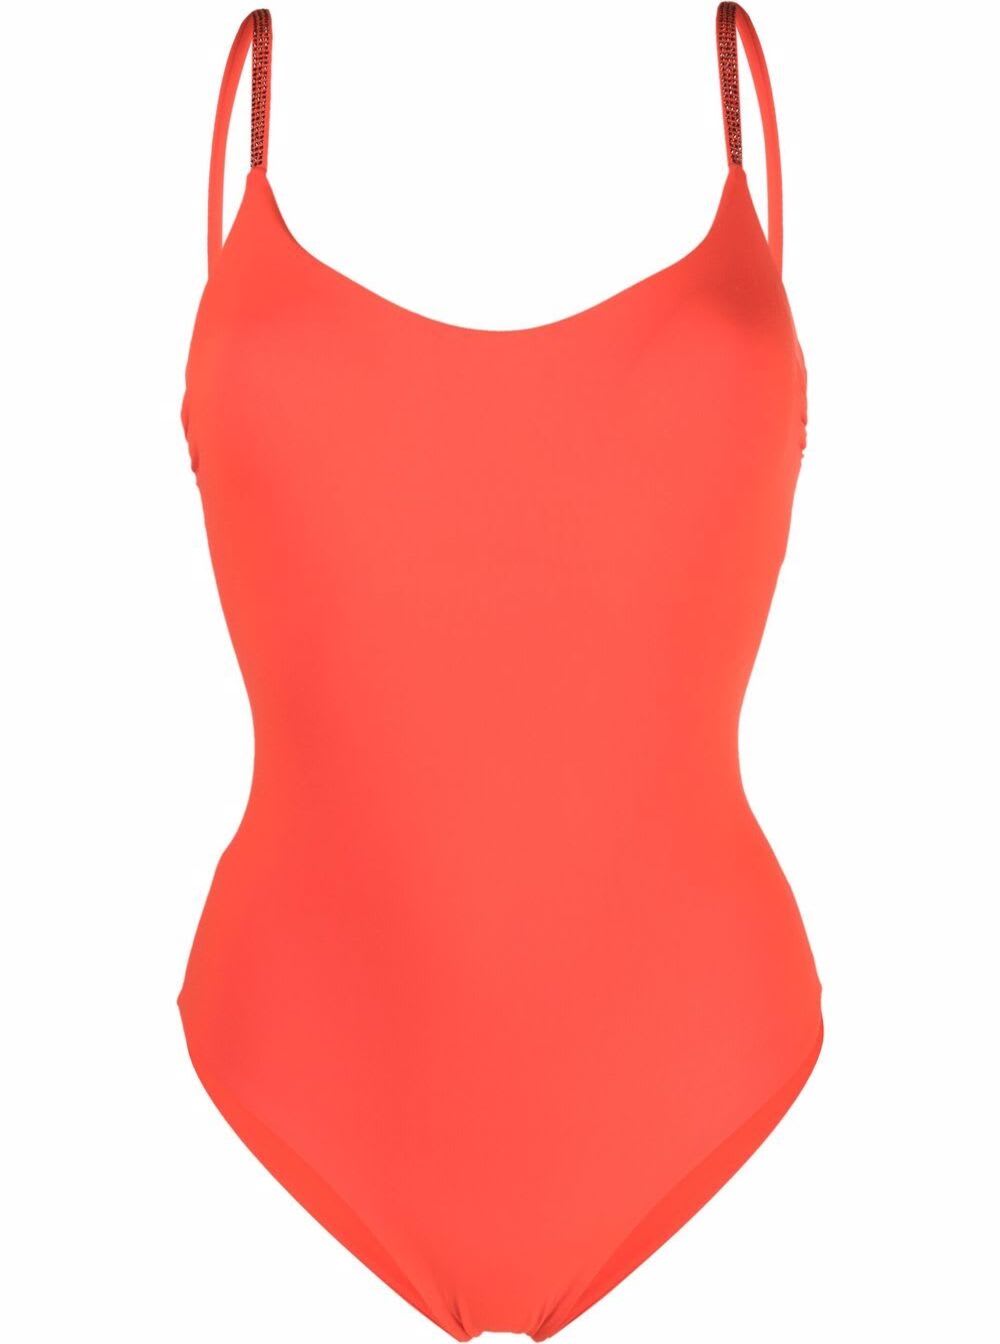 Fisico - Cristina Ferrari Fisico Womans Orange One-piece Stretch Fabric Swimsuit With Glittered Inserts